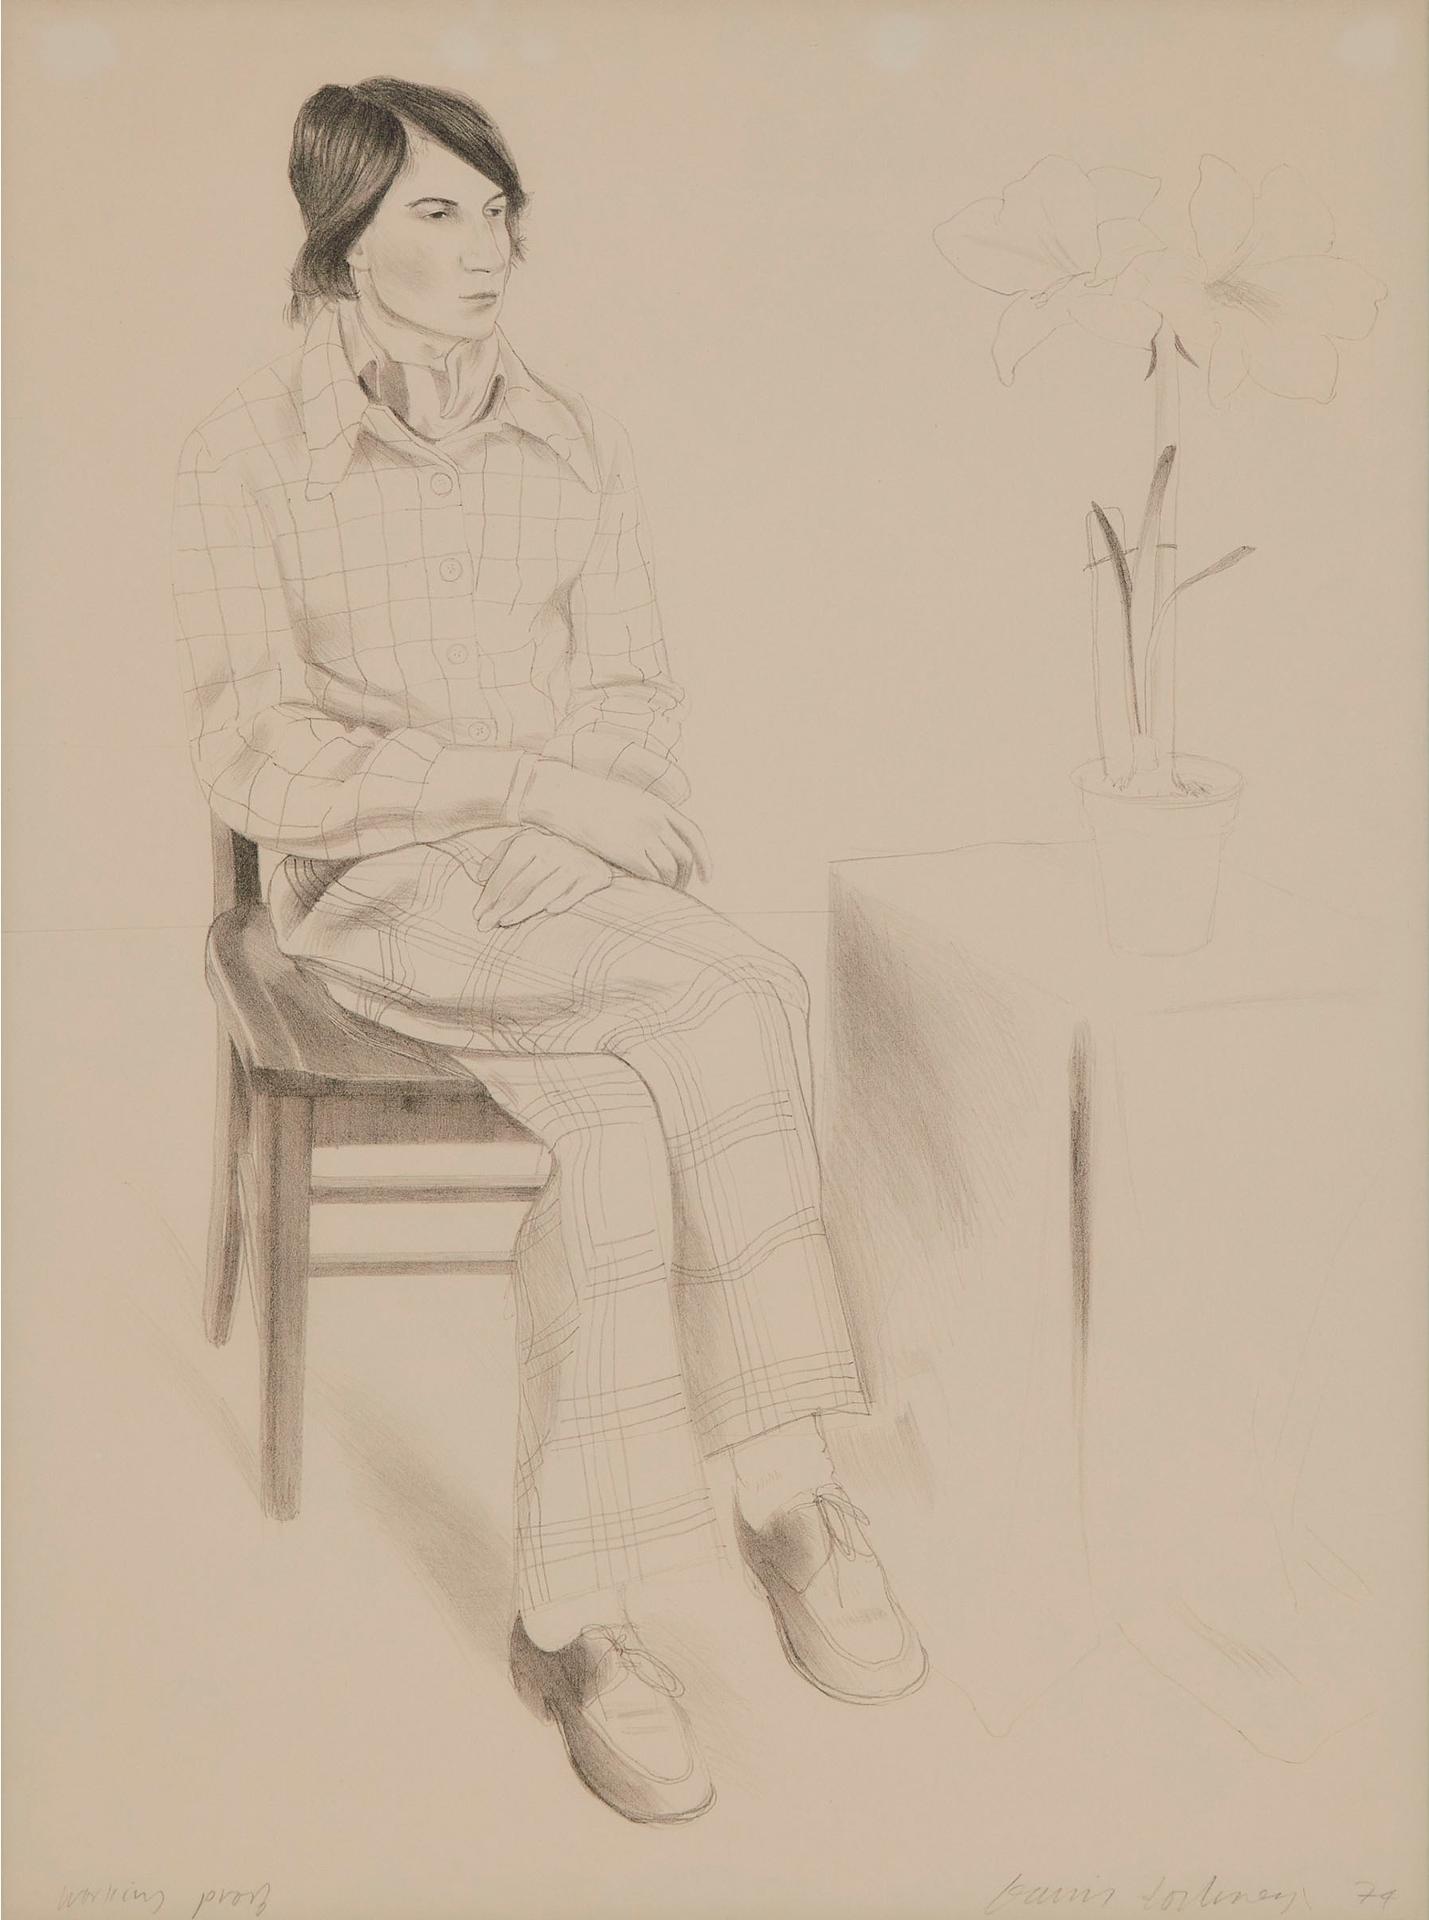 David Hockney (1937) - YVES-MARIE HERVÉ, 1974 [S.A.C. 159; M.C.A.T. 156]